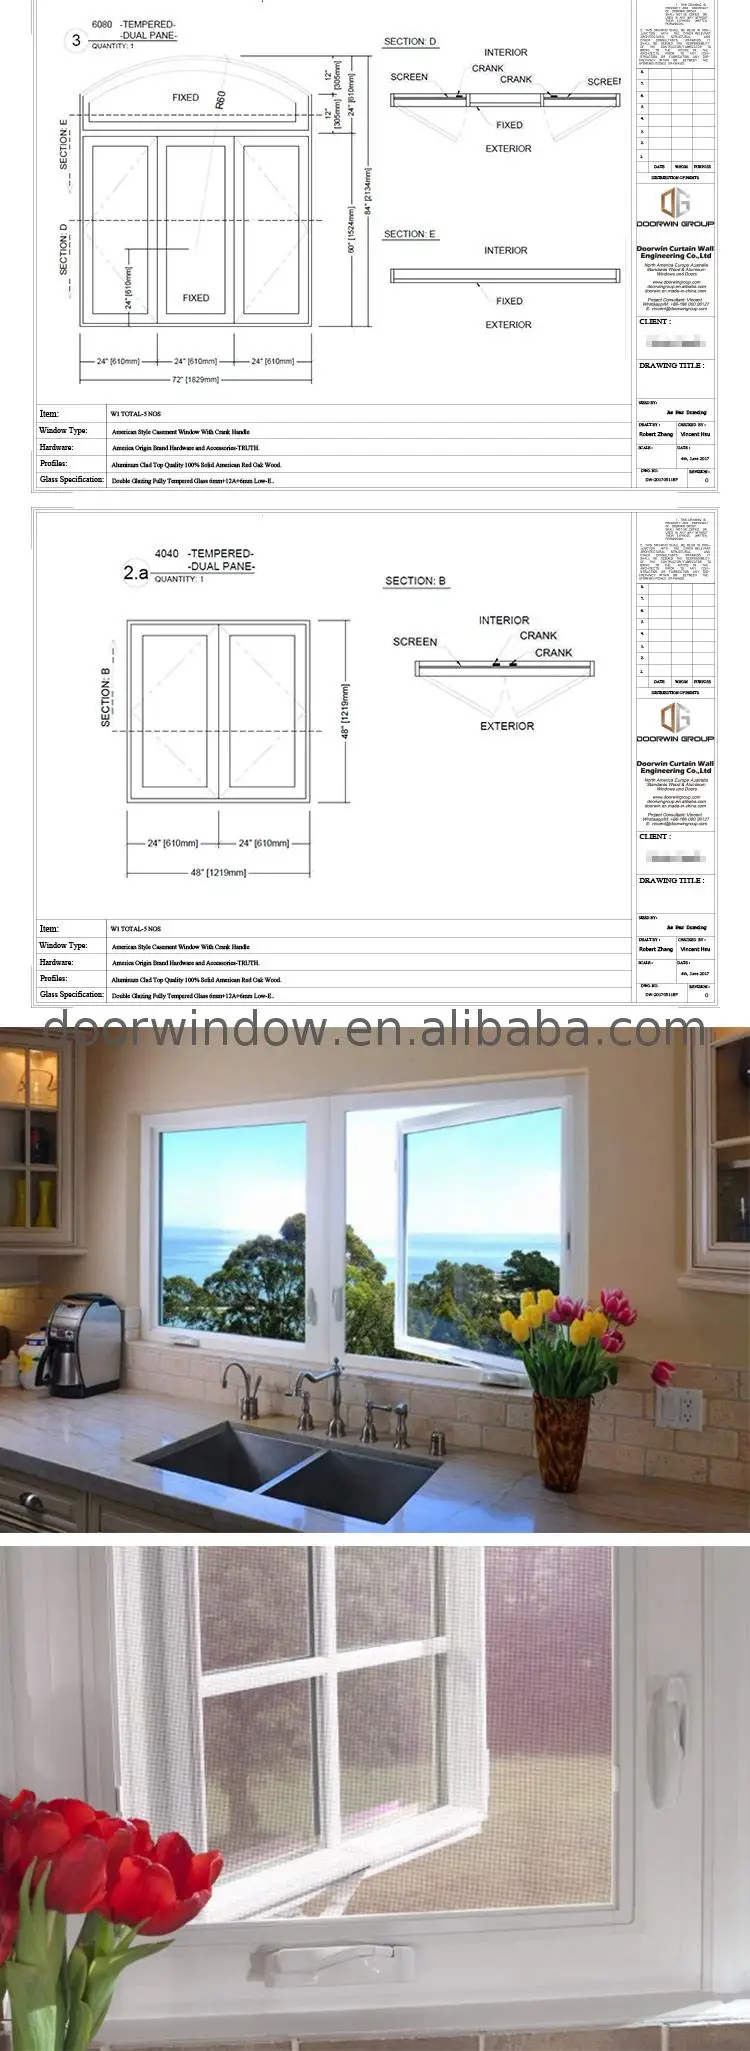 China Manufactory average cost of windows for house new australian window association